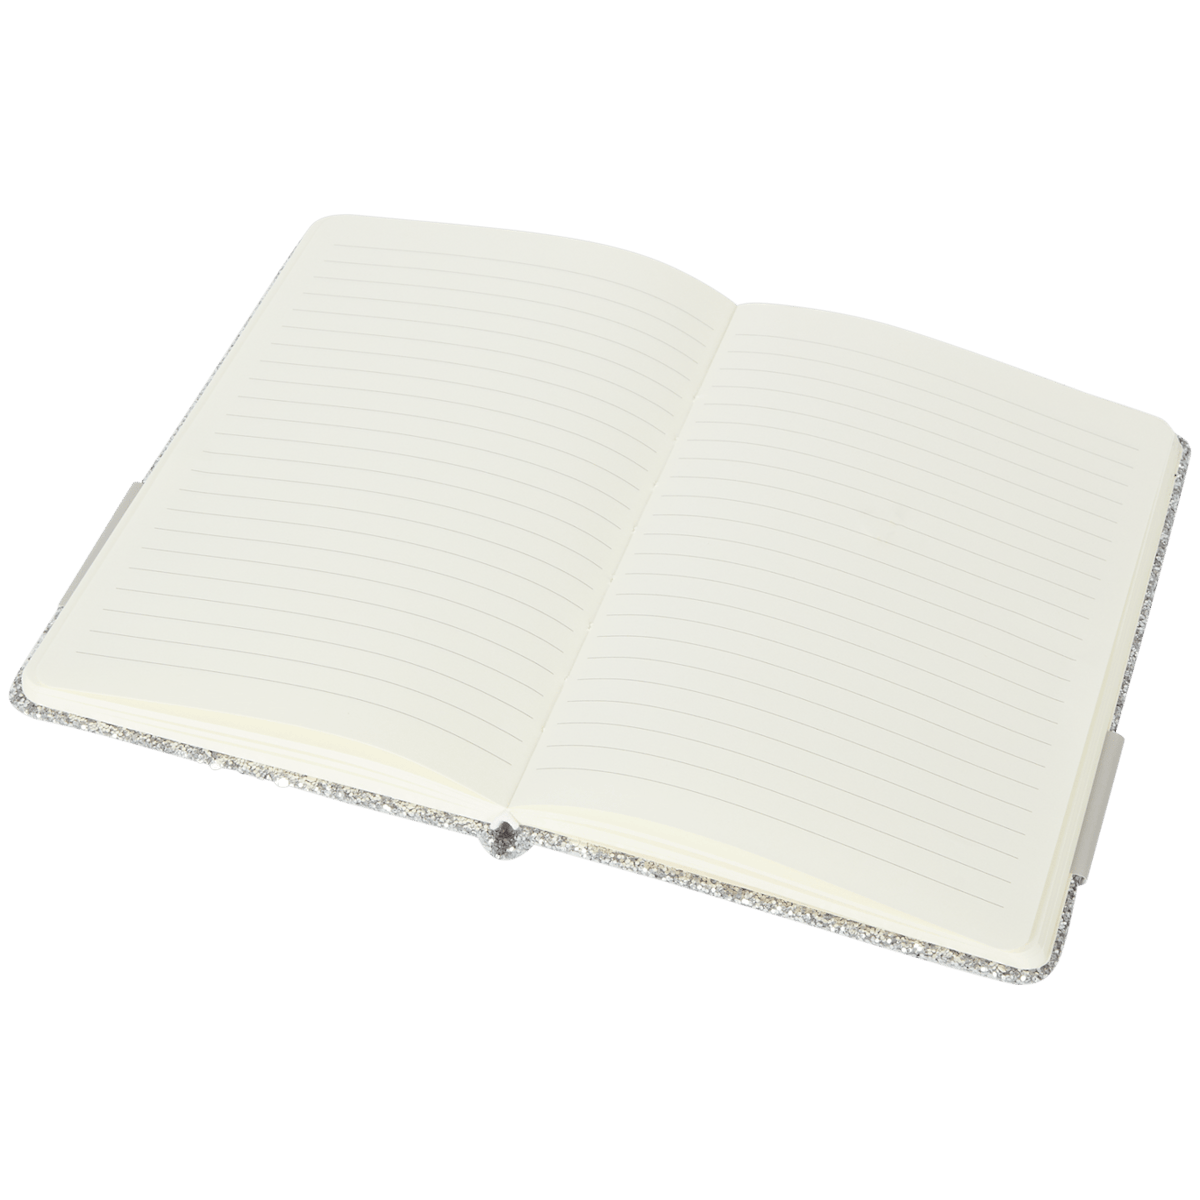 Notizbuch mit Glitzer